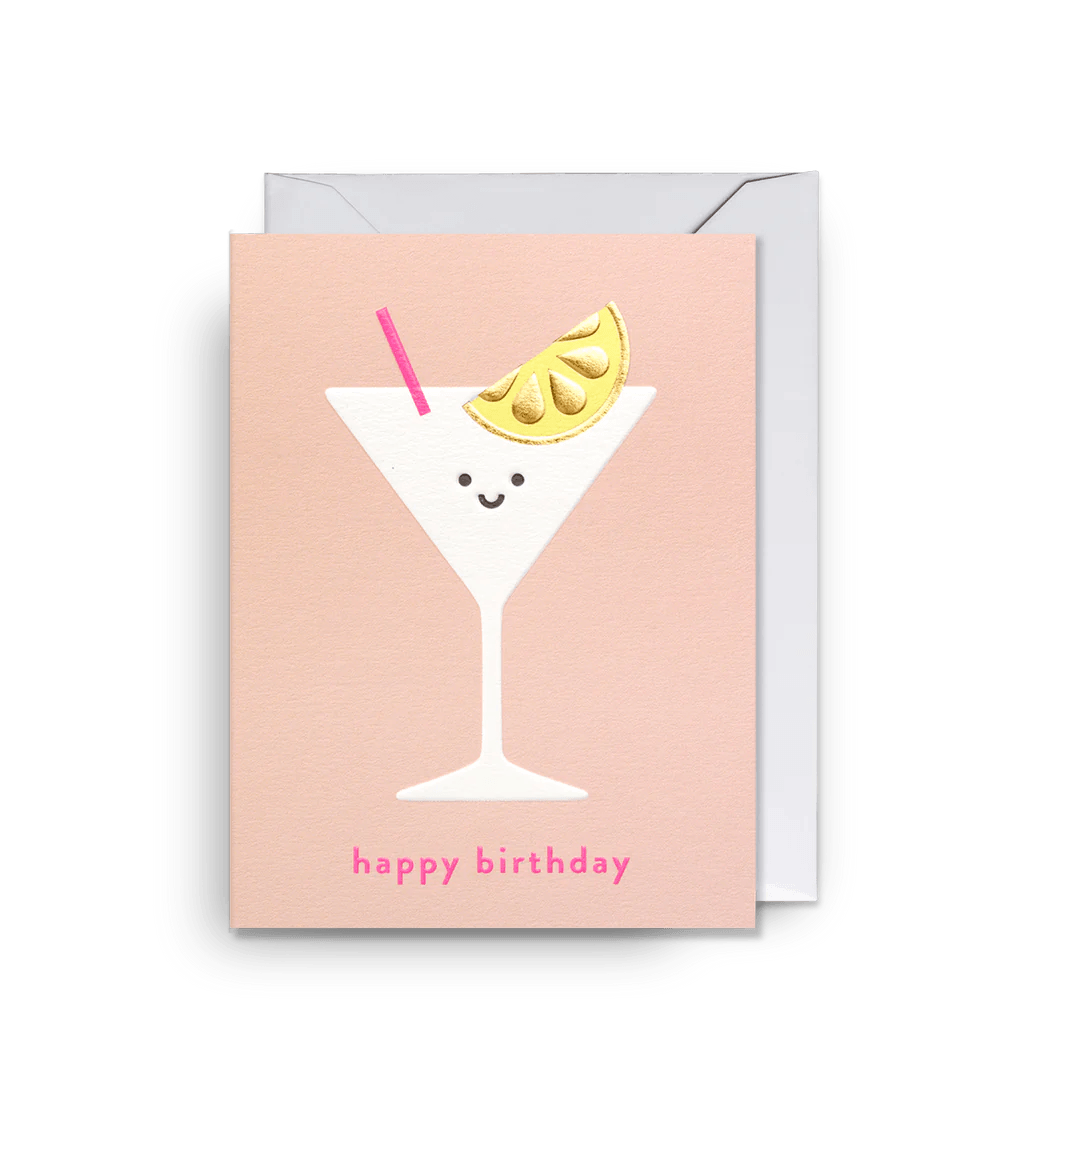 'Coctail Happy Birthday' Greeting Card - leonidasbrighton.co.uk - Leonidas Brighton